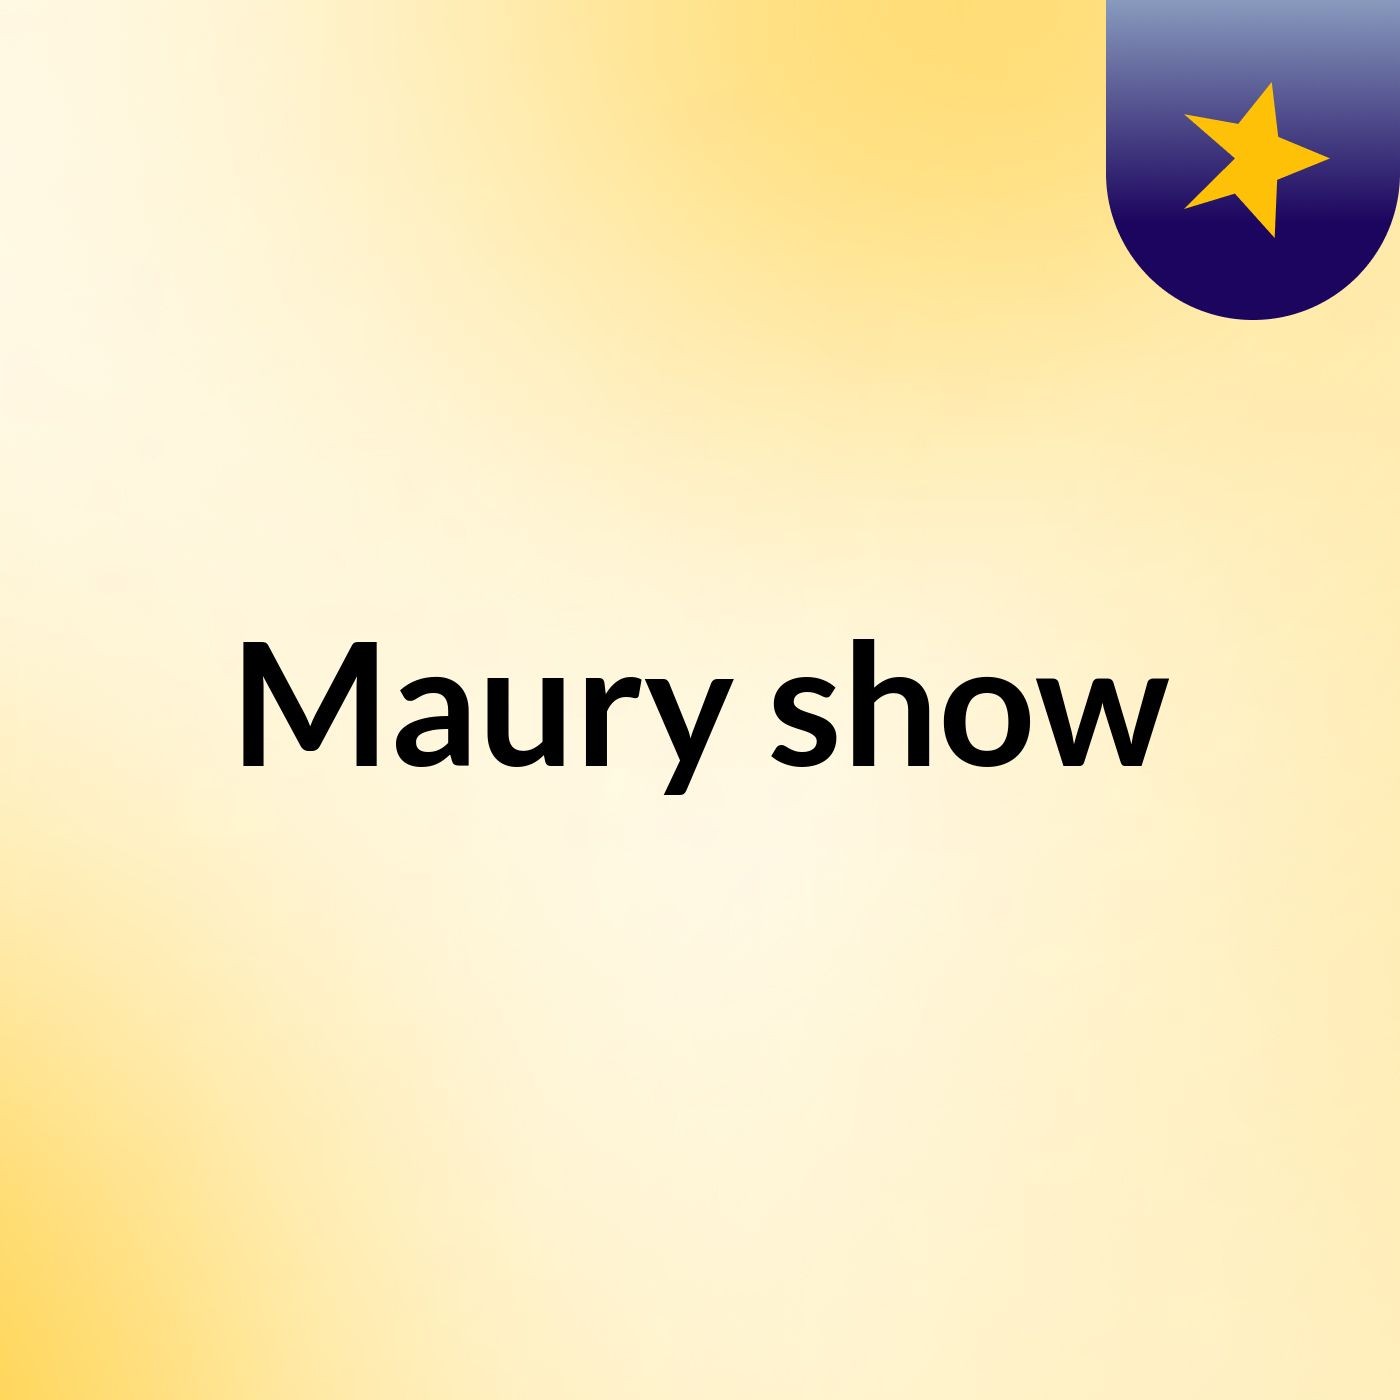 Maury'show